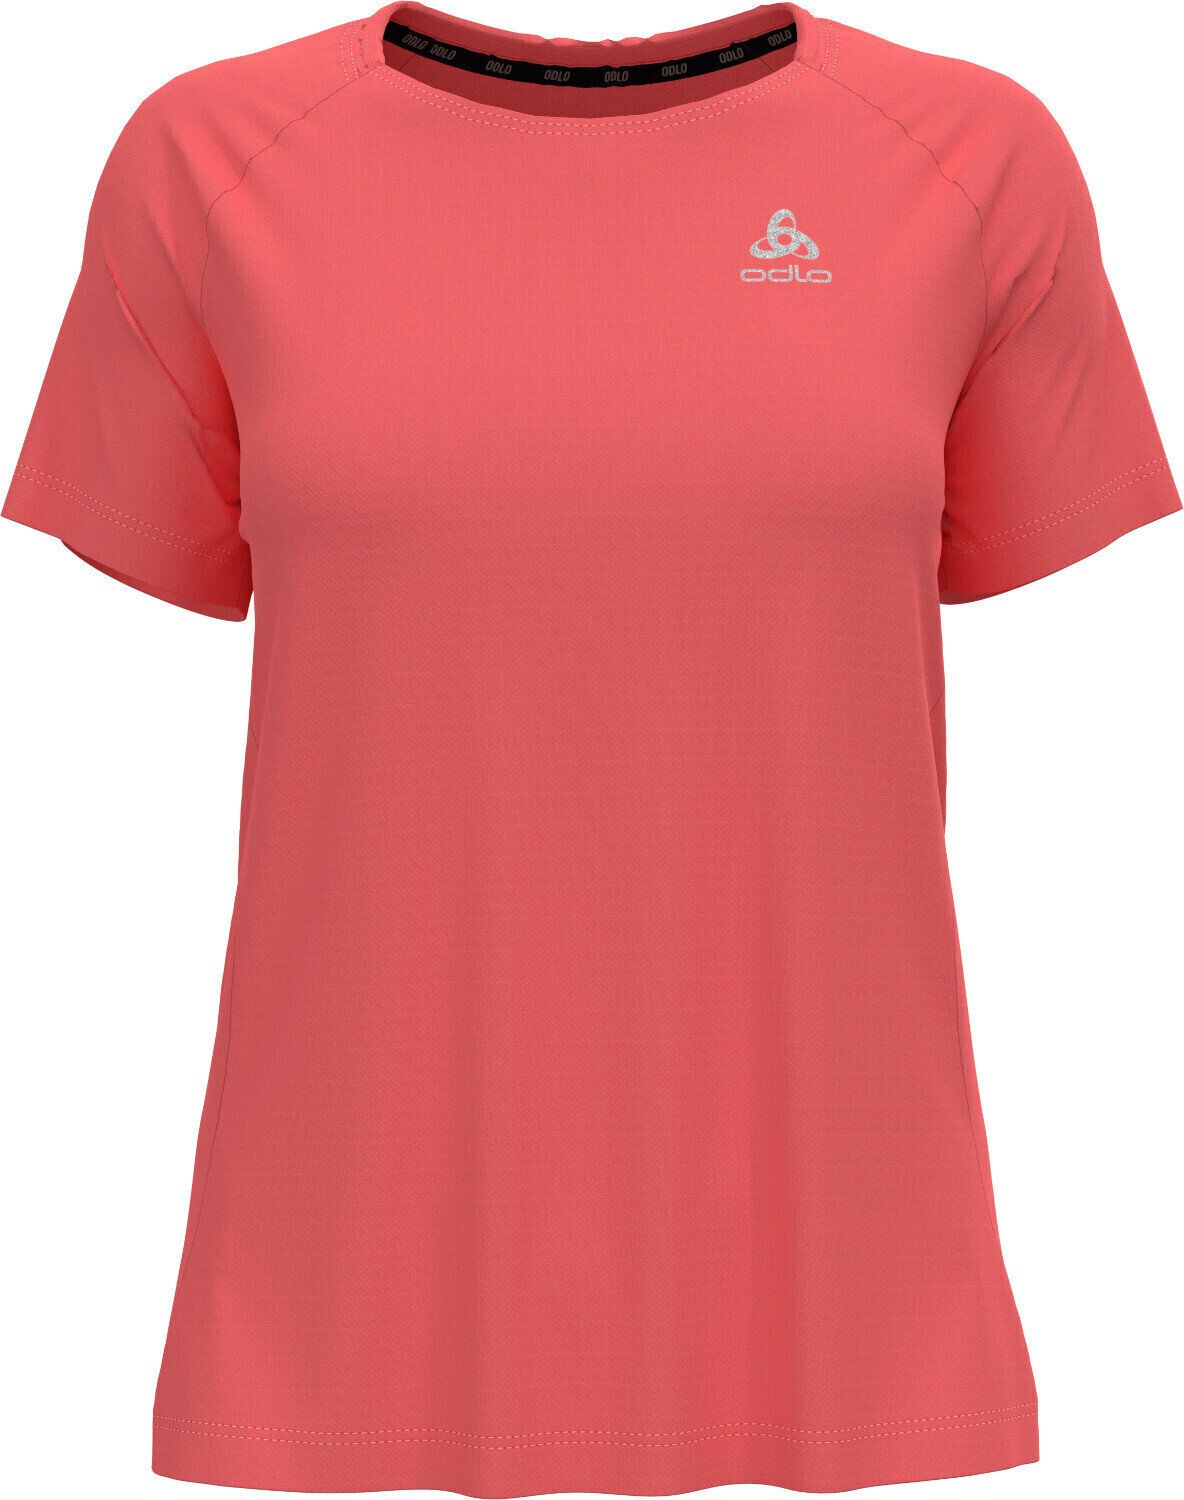 Running t-shirt with short sleeves
 Odlo Essential T-Shirt Siesta XS Running t-shirt with short sleeves